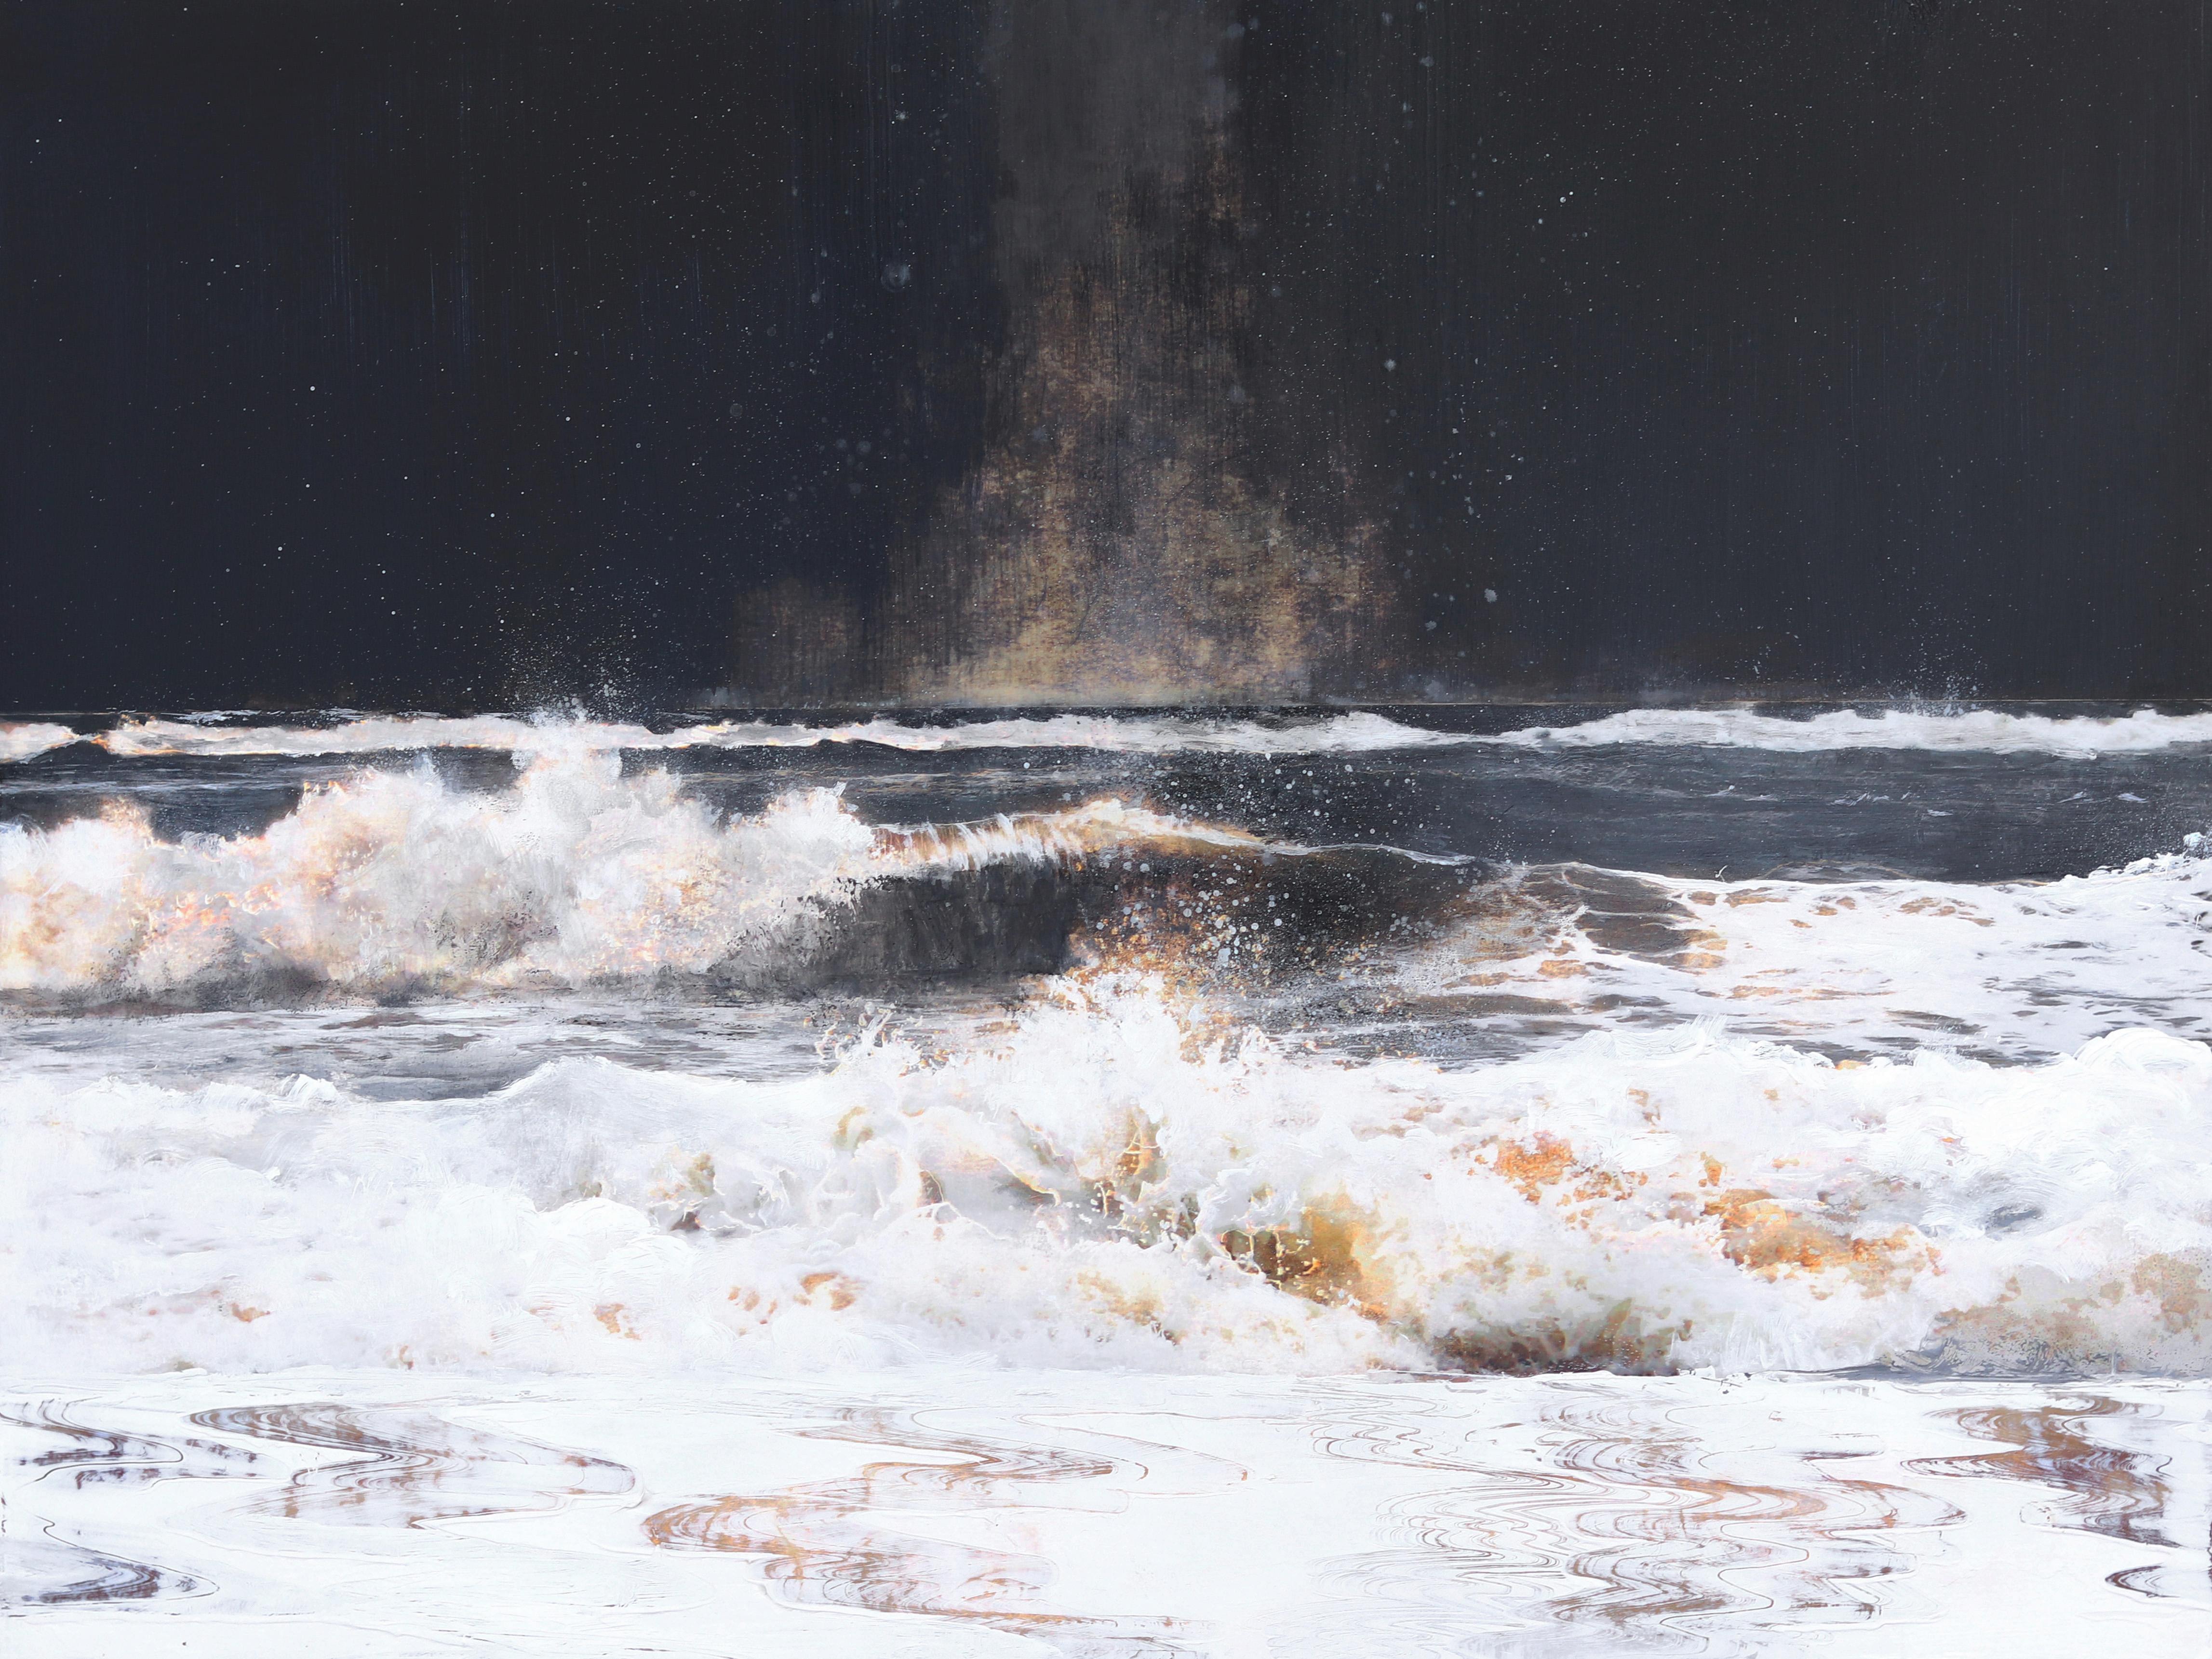 "The Depth of Night" (La profondeur de la nuit) - Peinture d'un paysage marin de vagues déferlantes - Mixed Media Art de Steven Nederveen